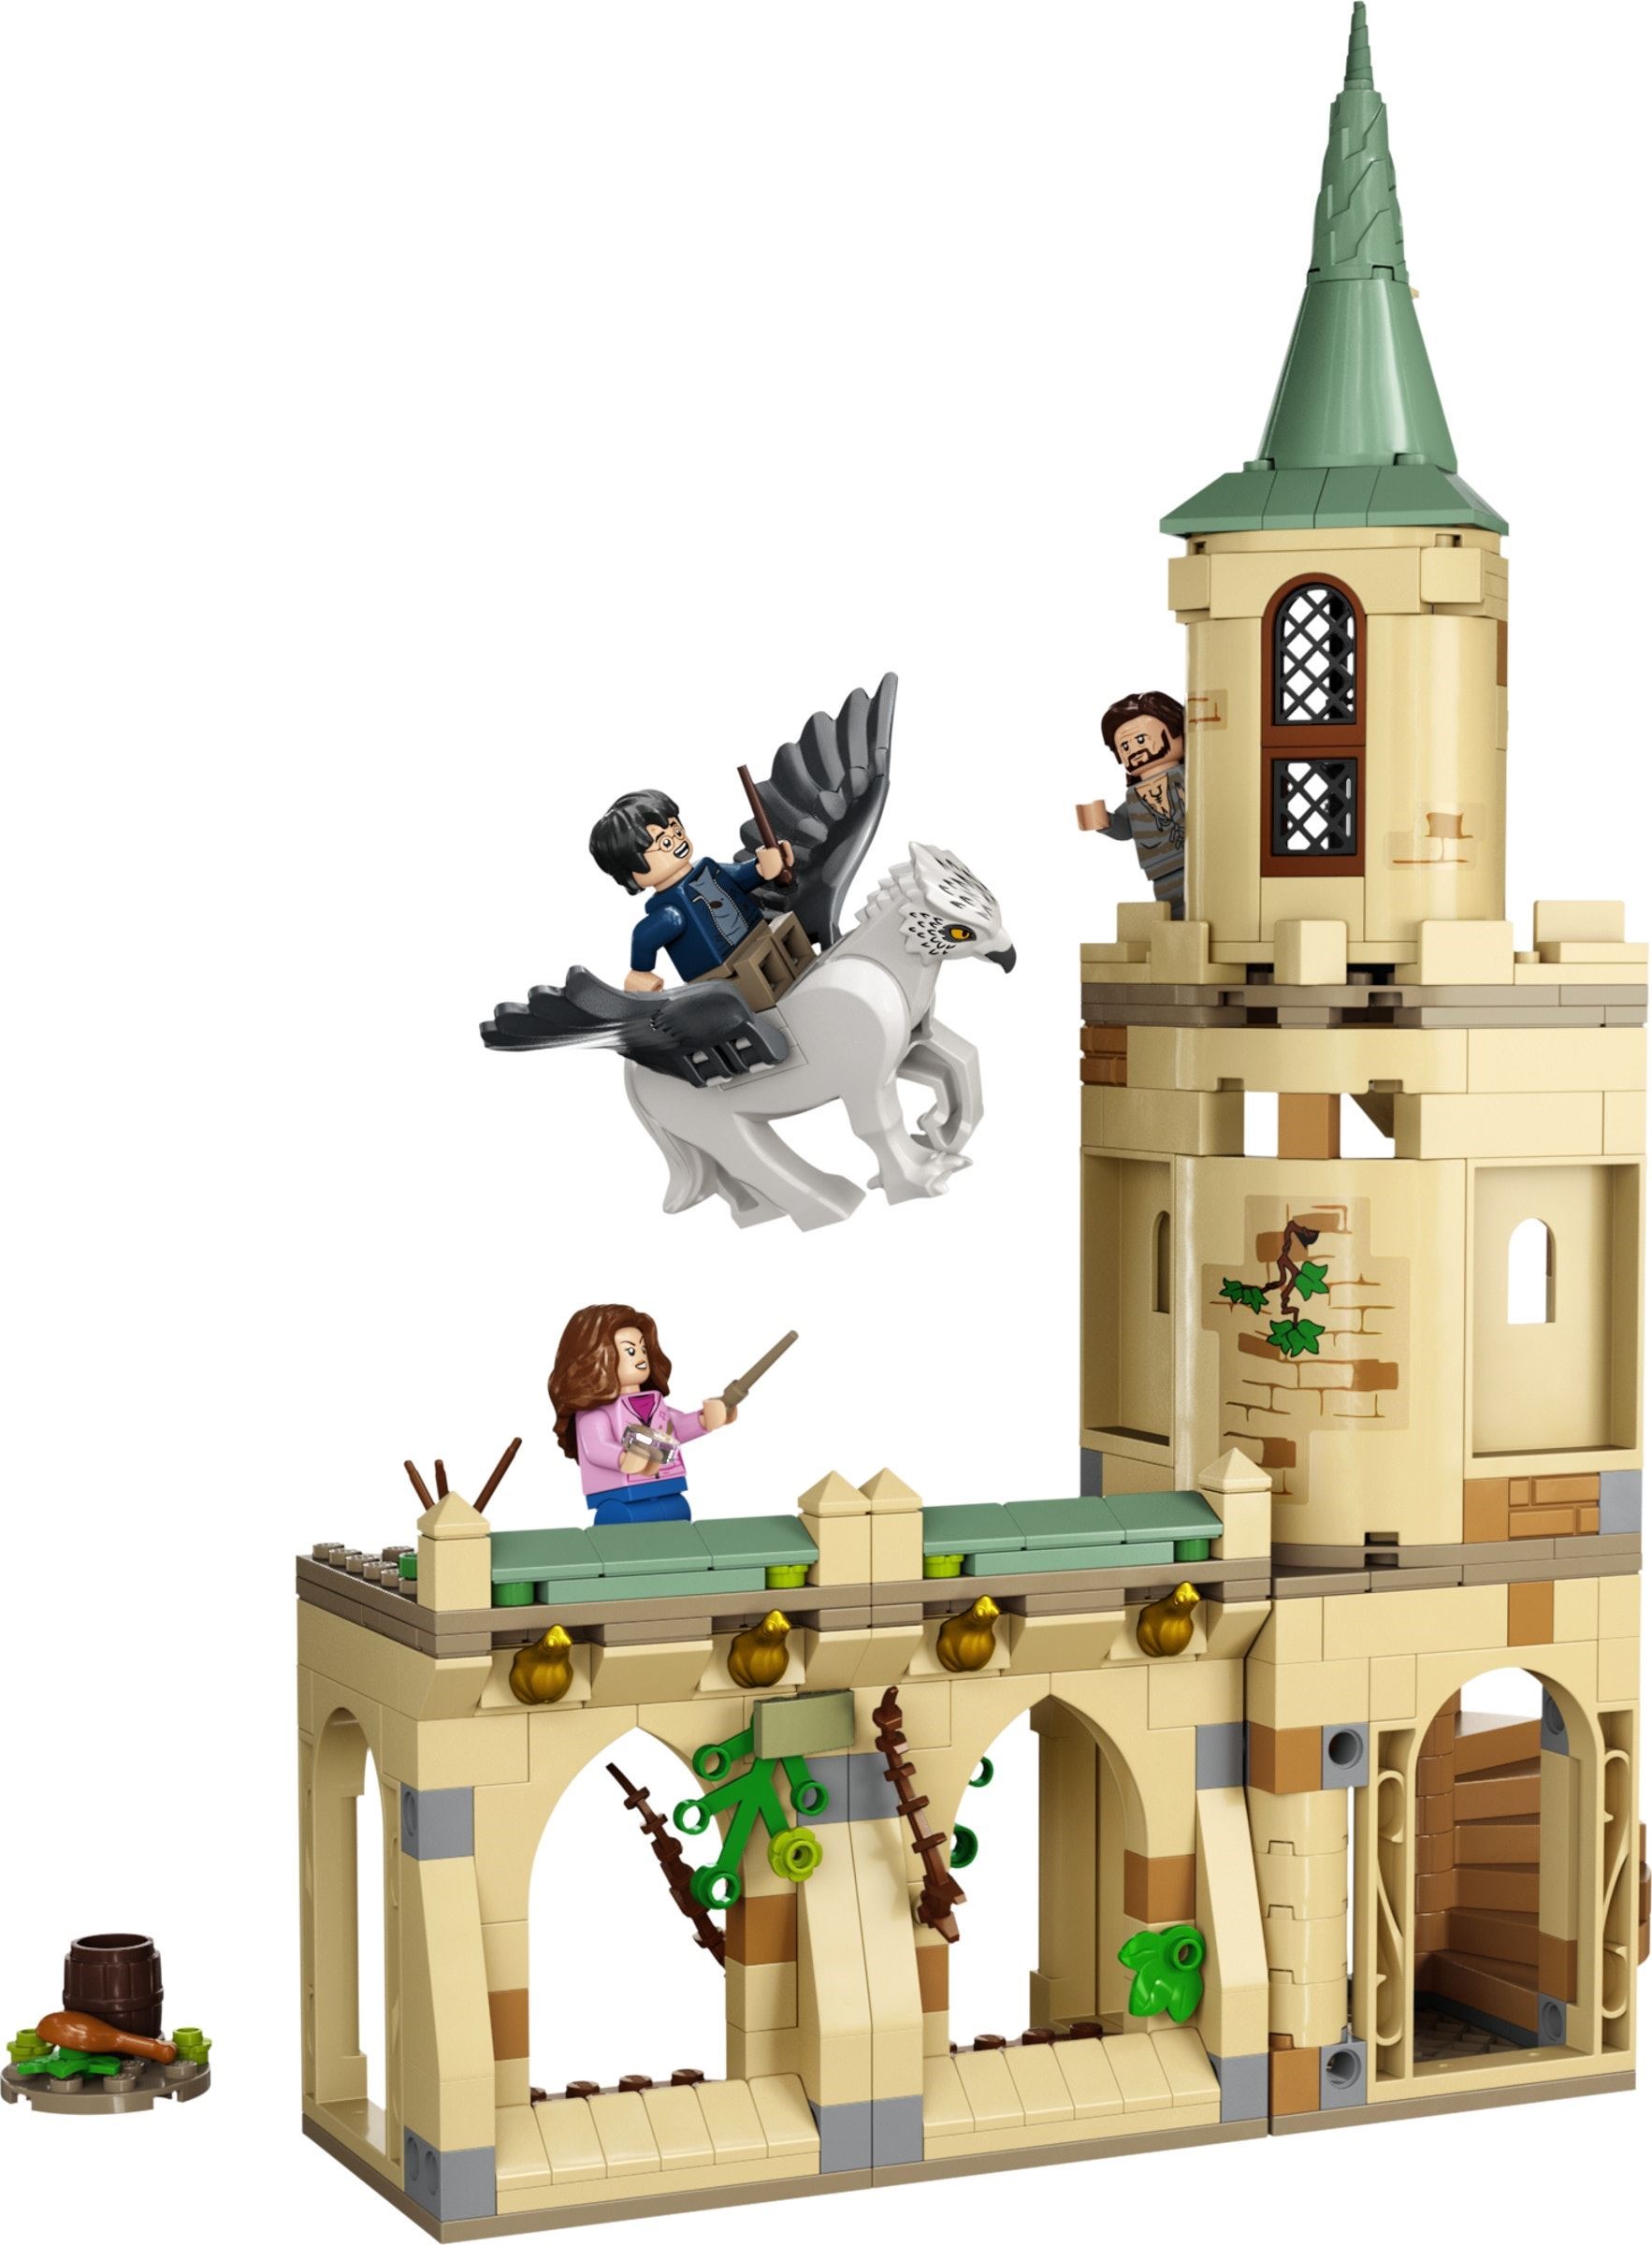 LEGO® Harry Potter™ 76401 - Hogwarts™: Sirius’ Rettung